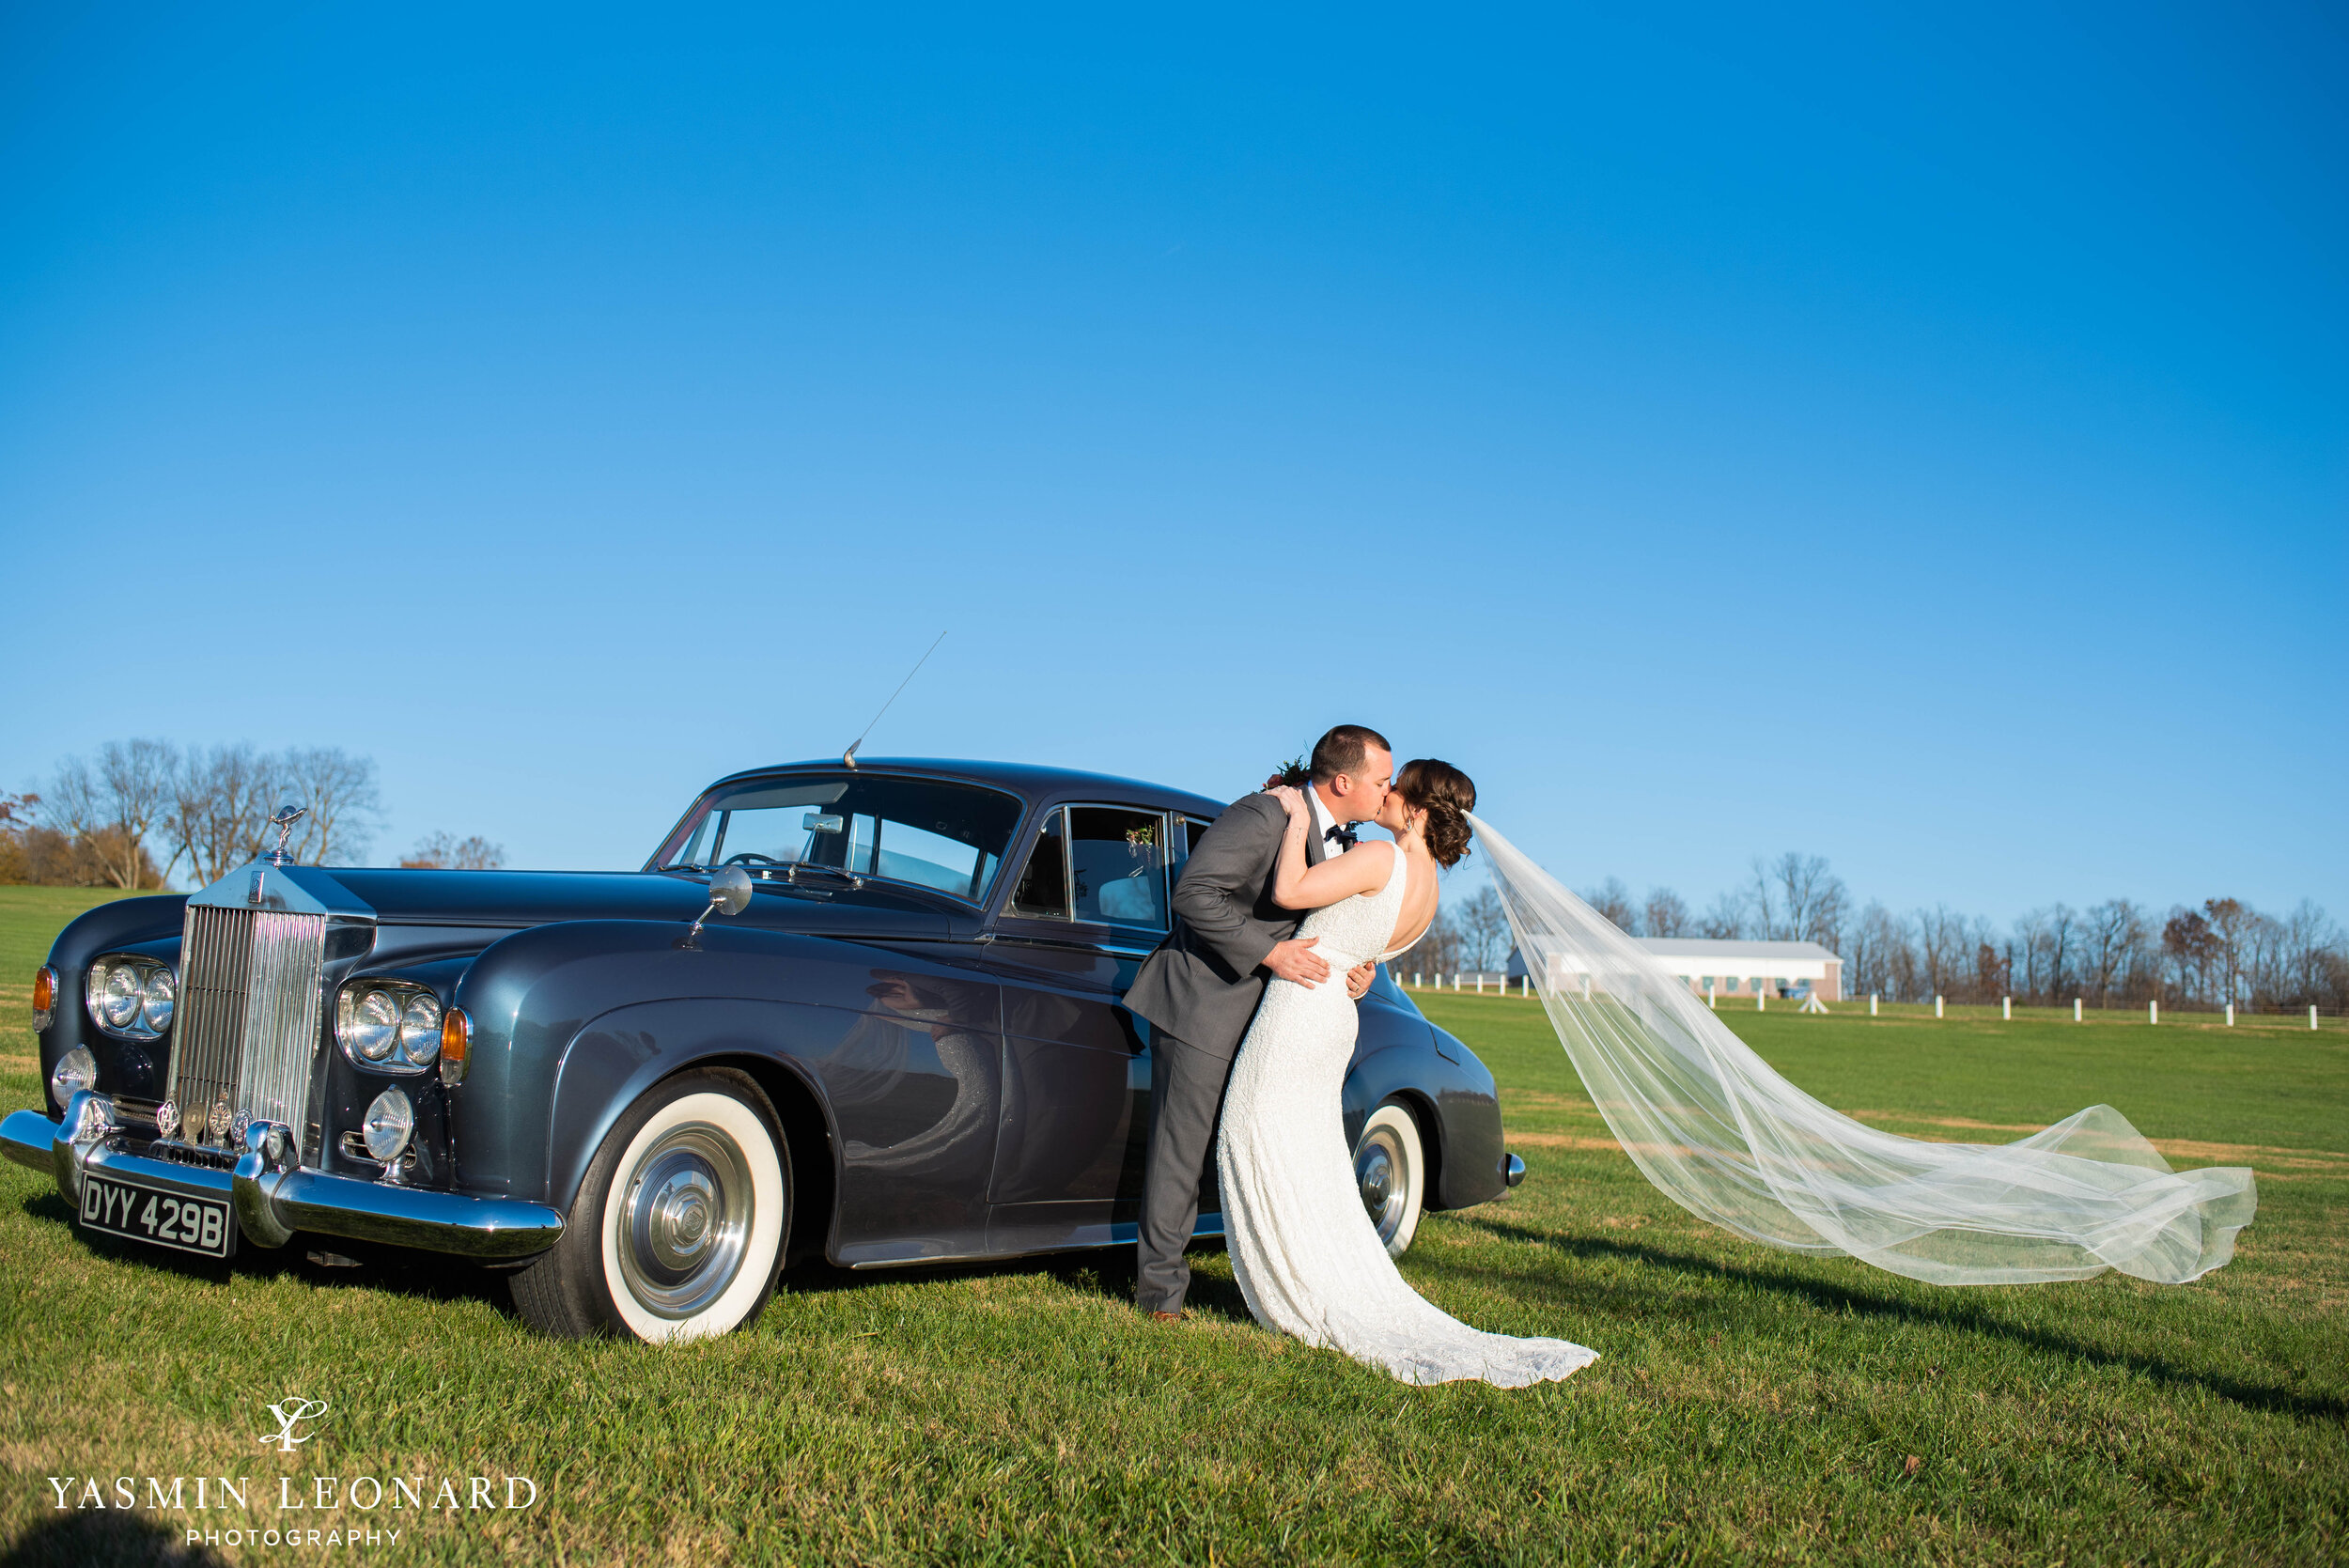 Jared and Katy - Adaumont Farms - High Point Weddings - NC Barn Weddings - Yasmin Leonard Photography-28.jpg